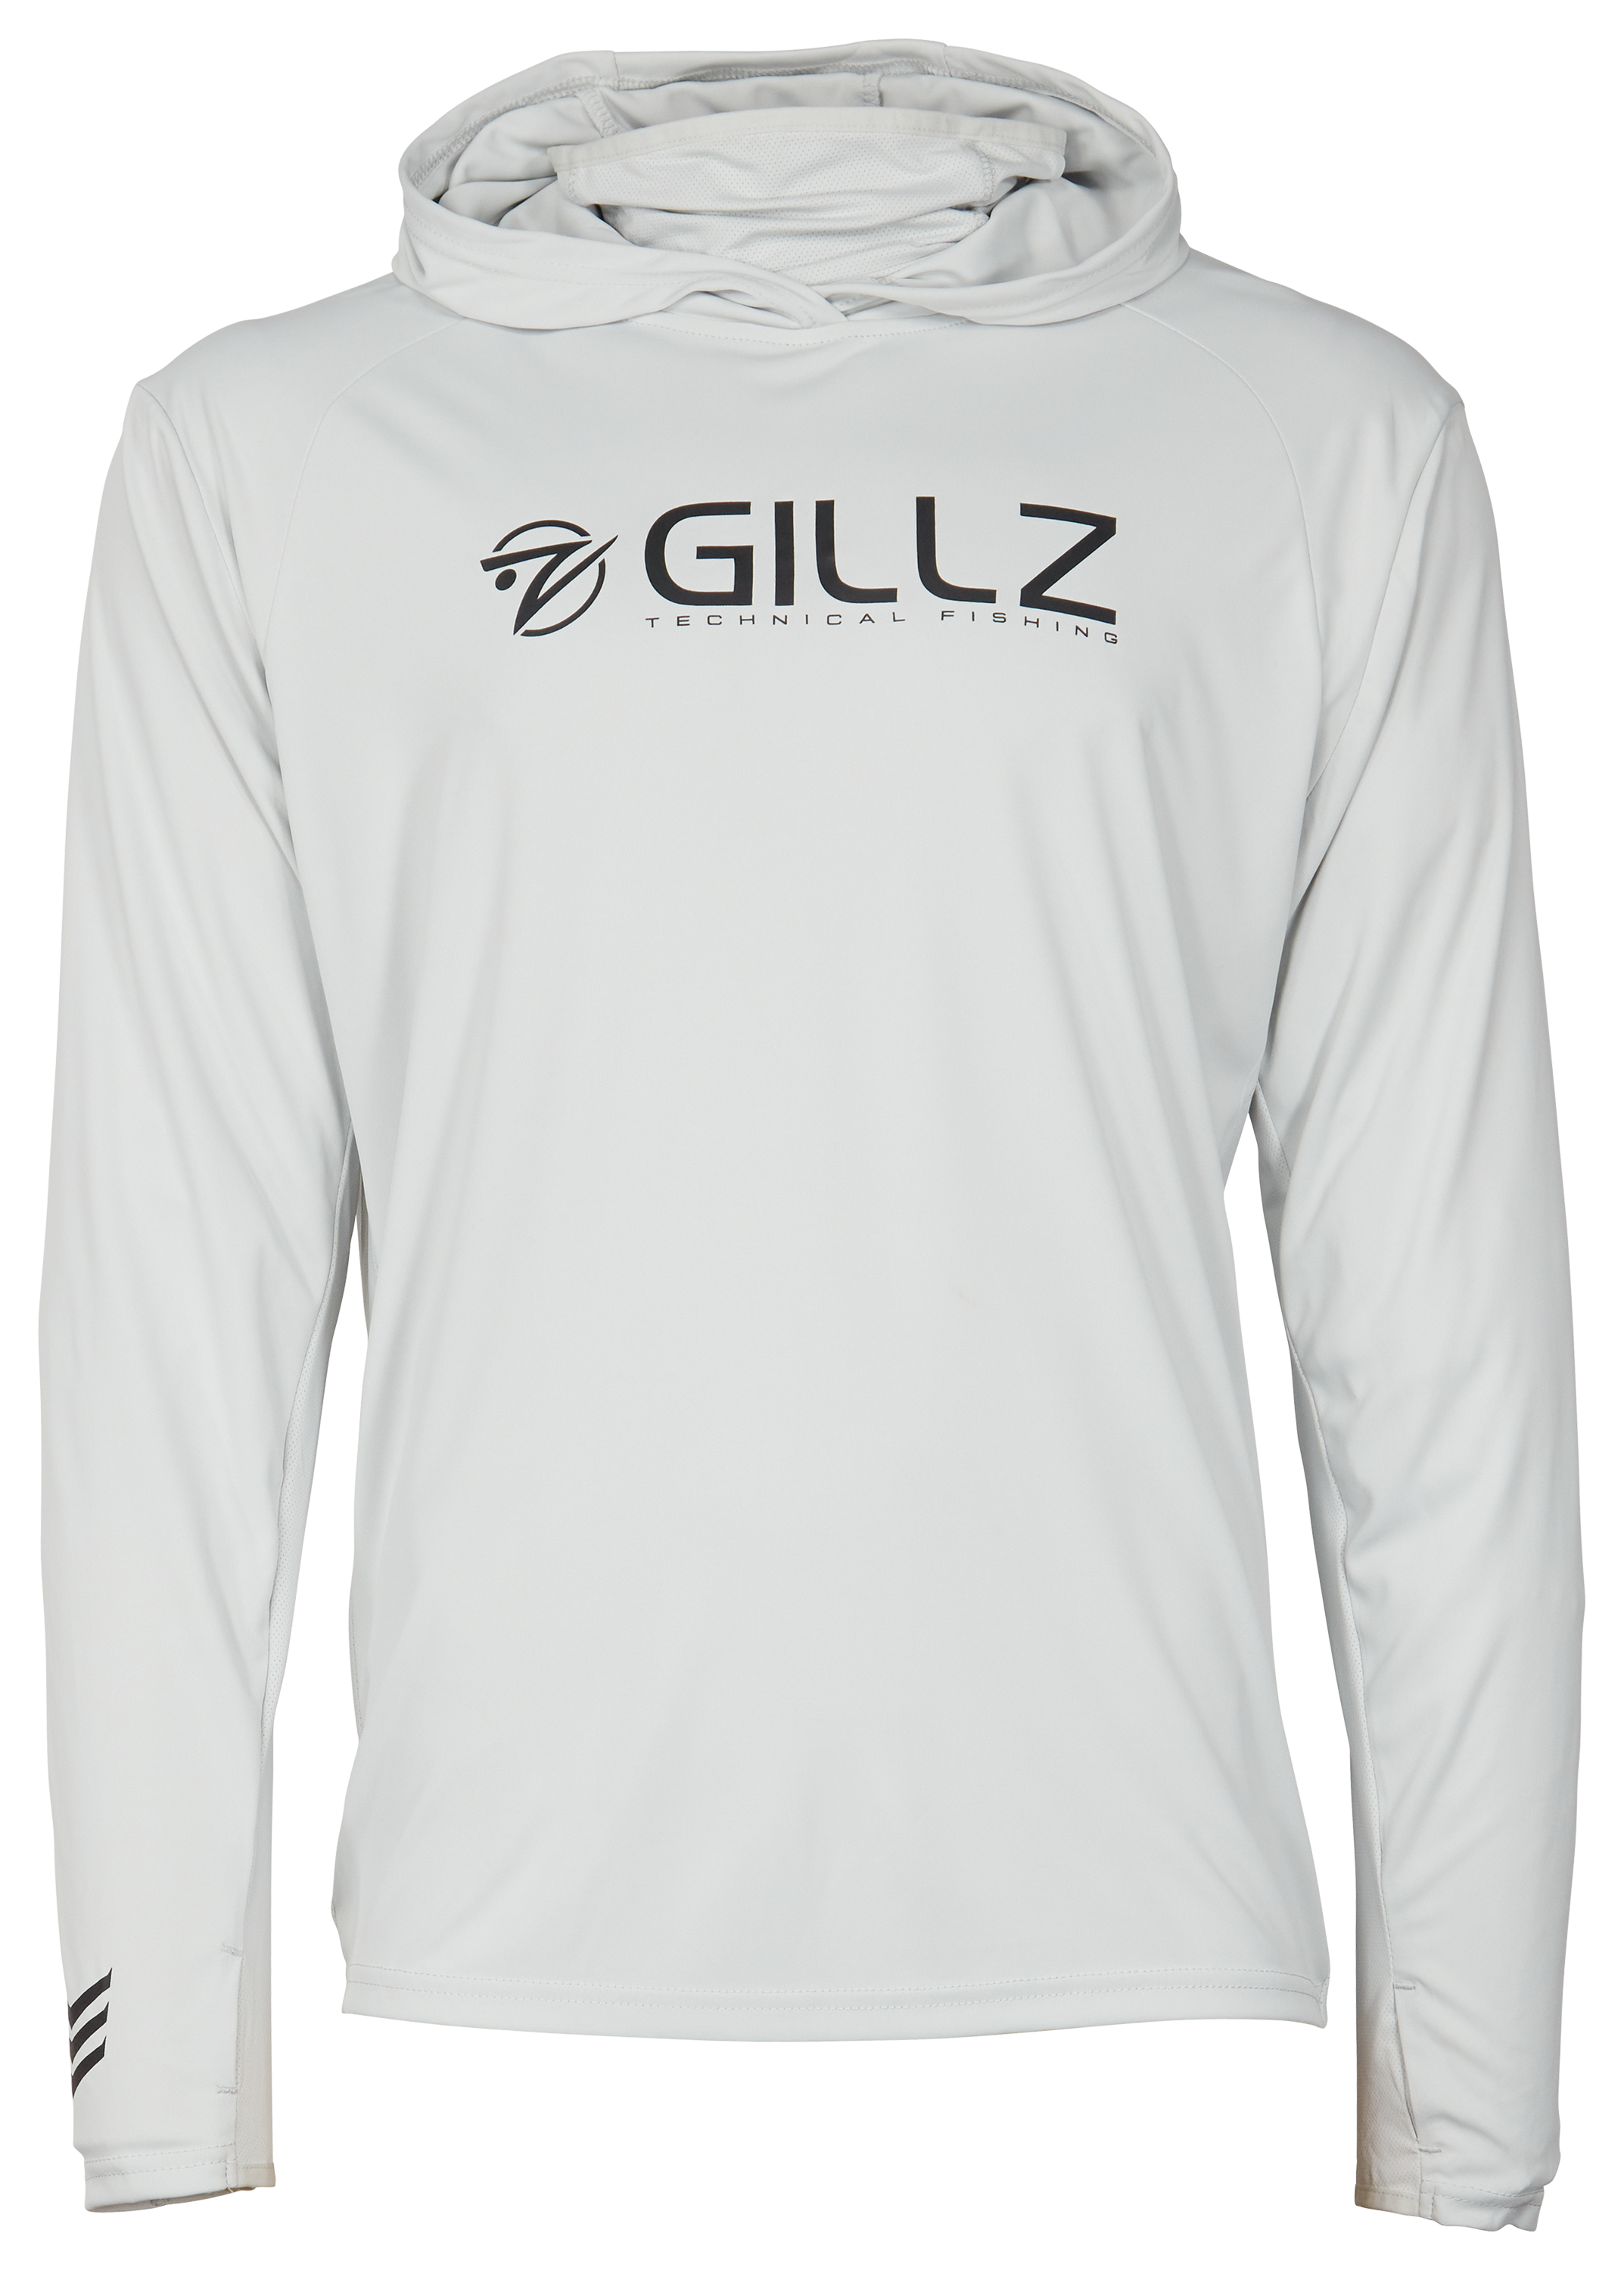 Gillz Pro Series UV Long-Sleeve Hoodie for Men